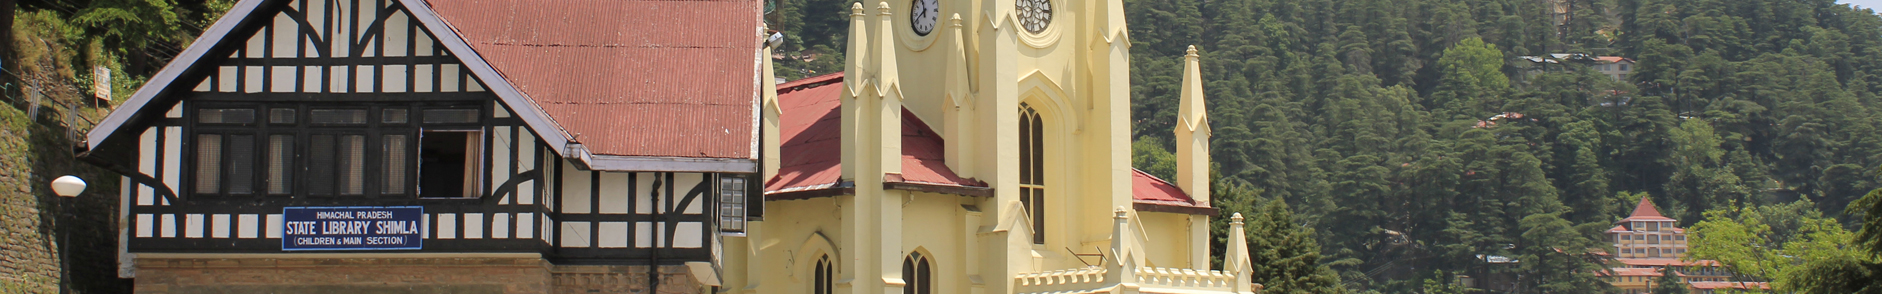 St. Mary's Church, Shimla